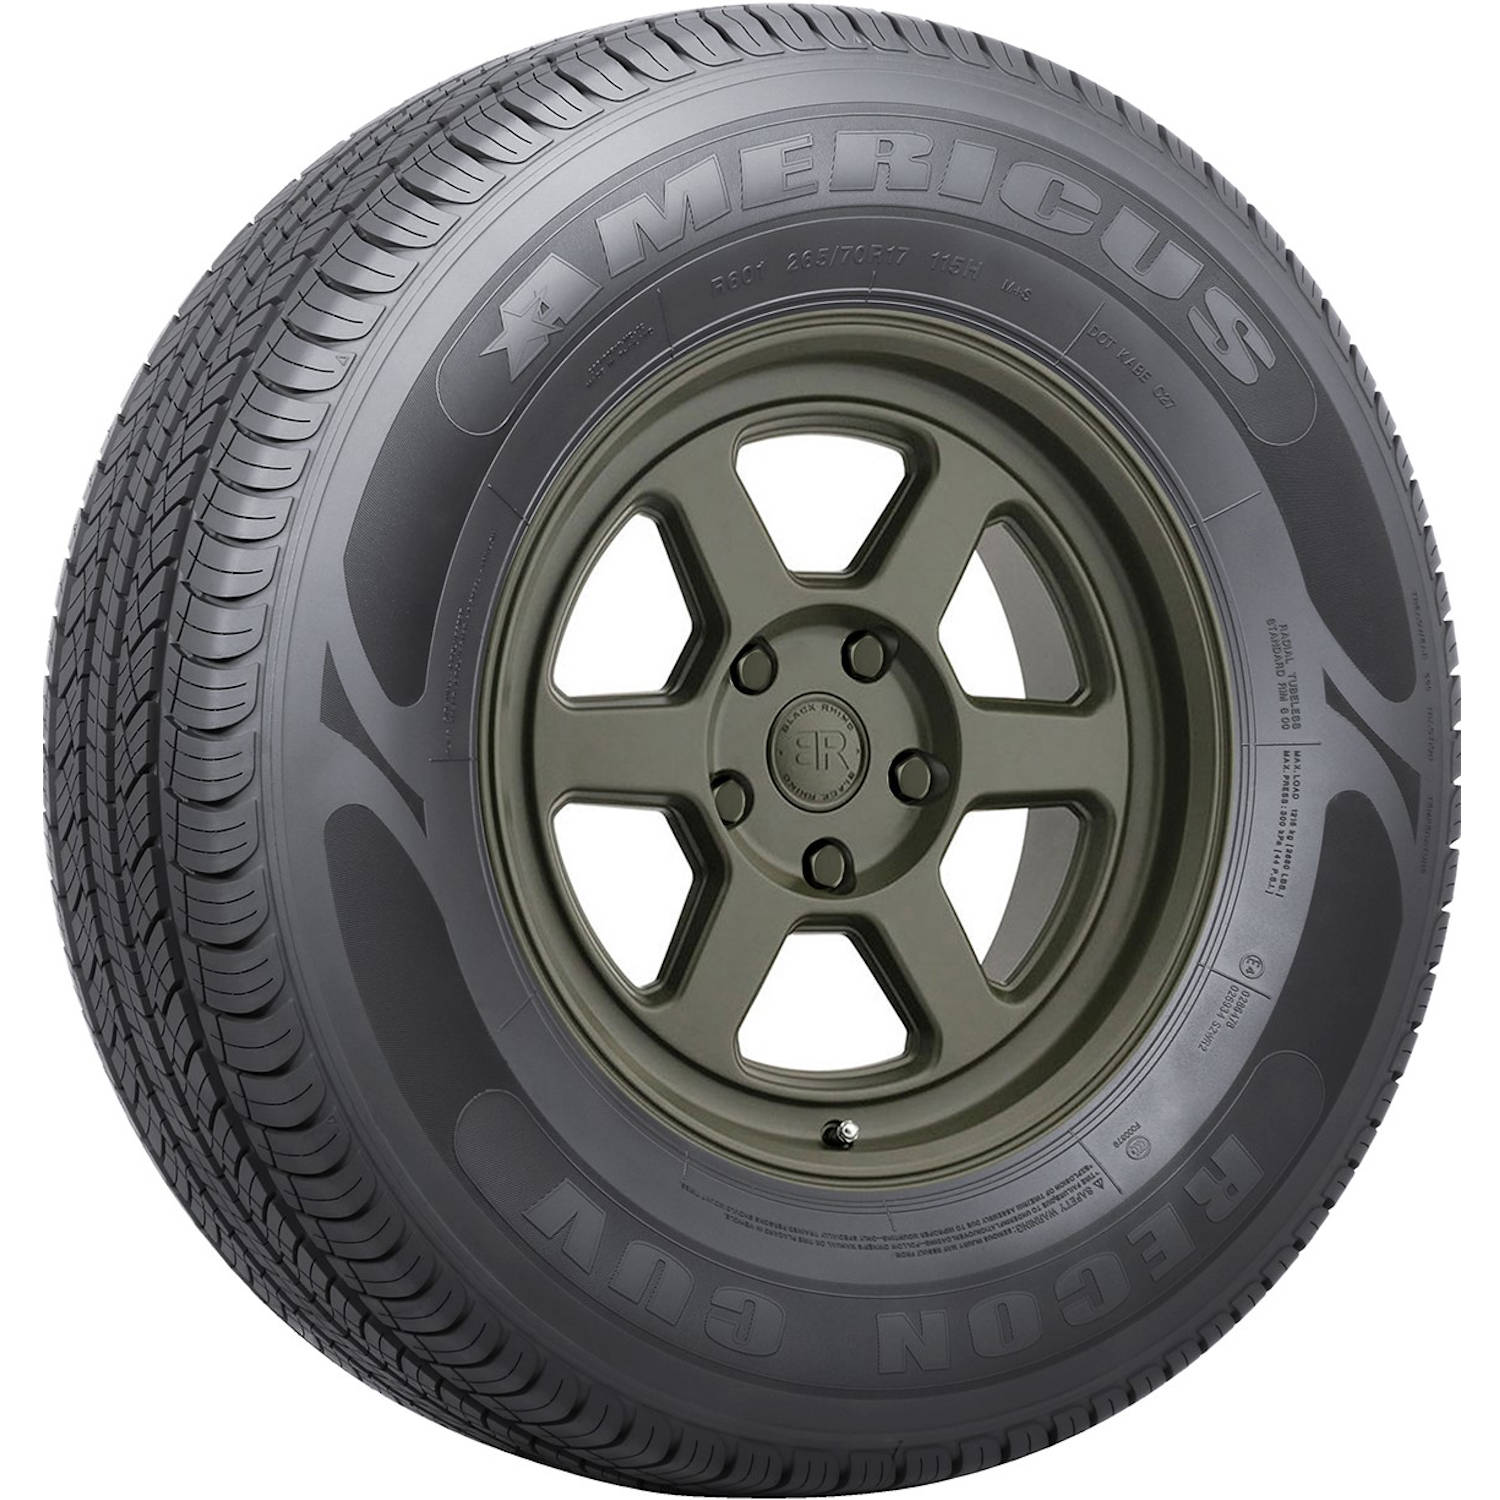 AMERICUS RECON CUV 265/70R16 (30.6X10.4R 16) Tires